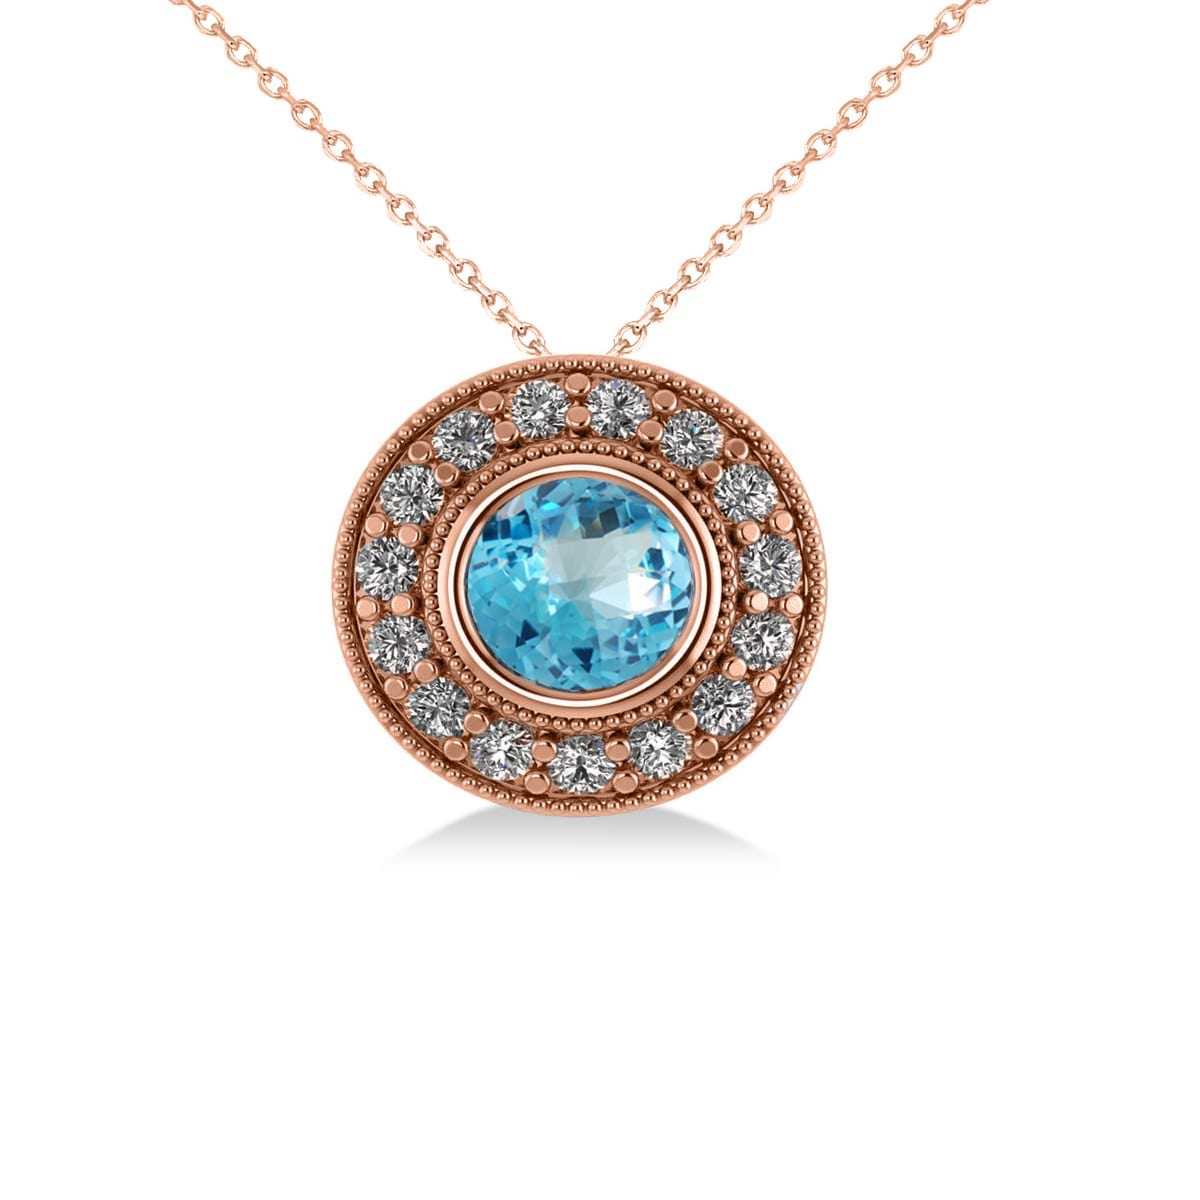 Round Blue Topaz & Diamond Halo Pendant Necklace 14k Rose Gold (1.81ct)